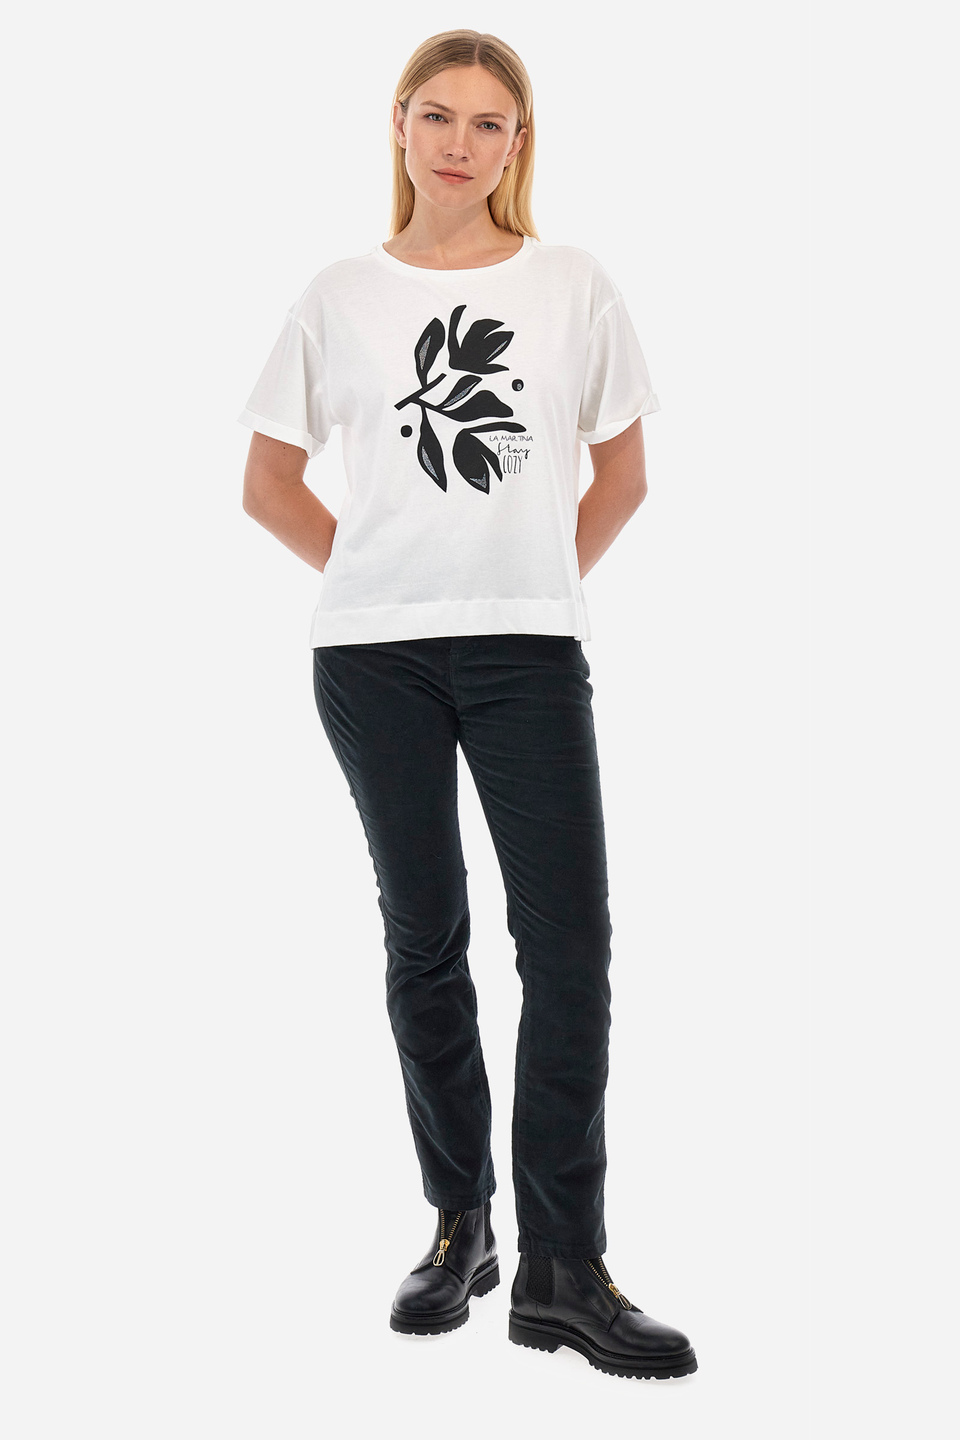 Tee-shirt femme coupe classique - Welda | La Martina - Official Online Shop